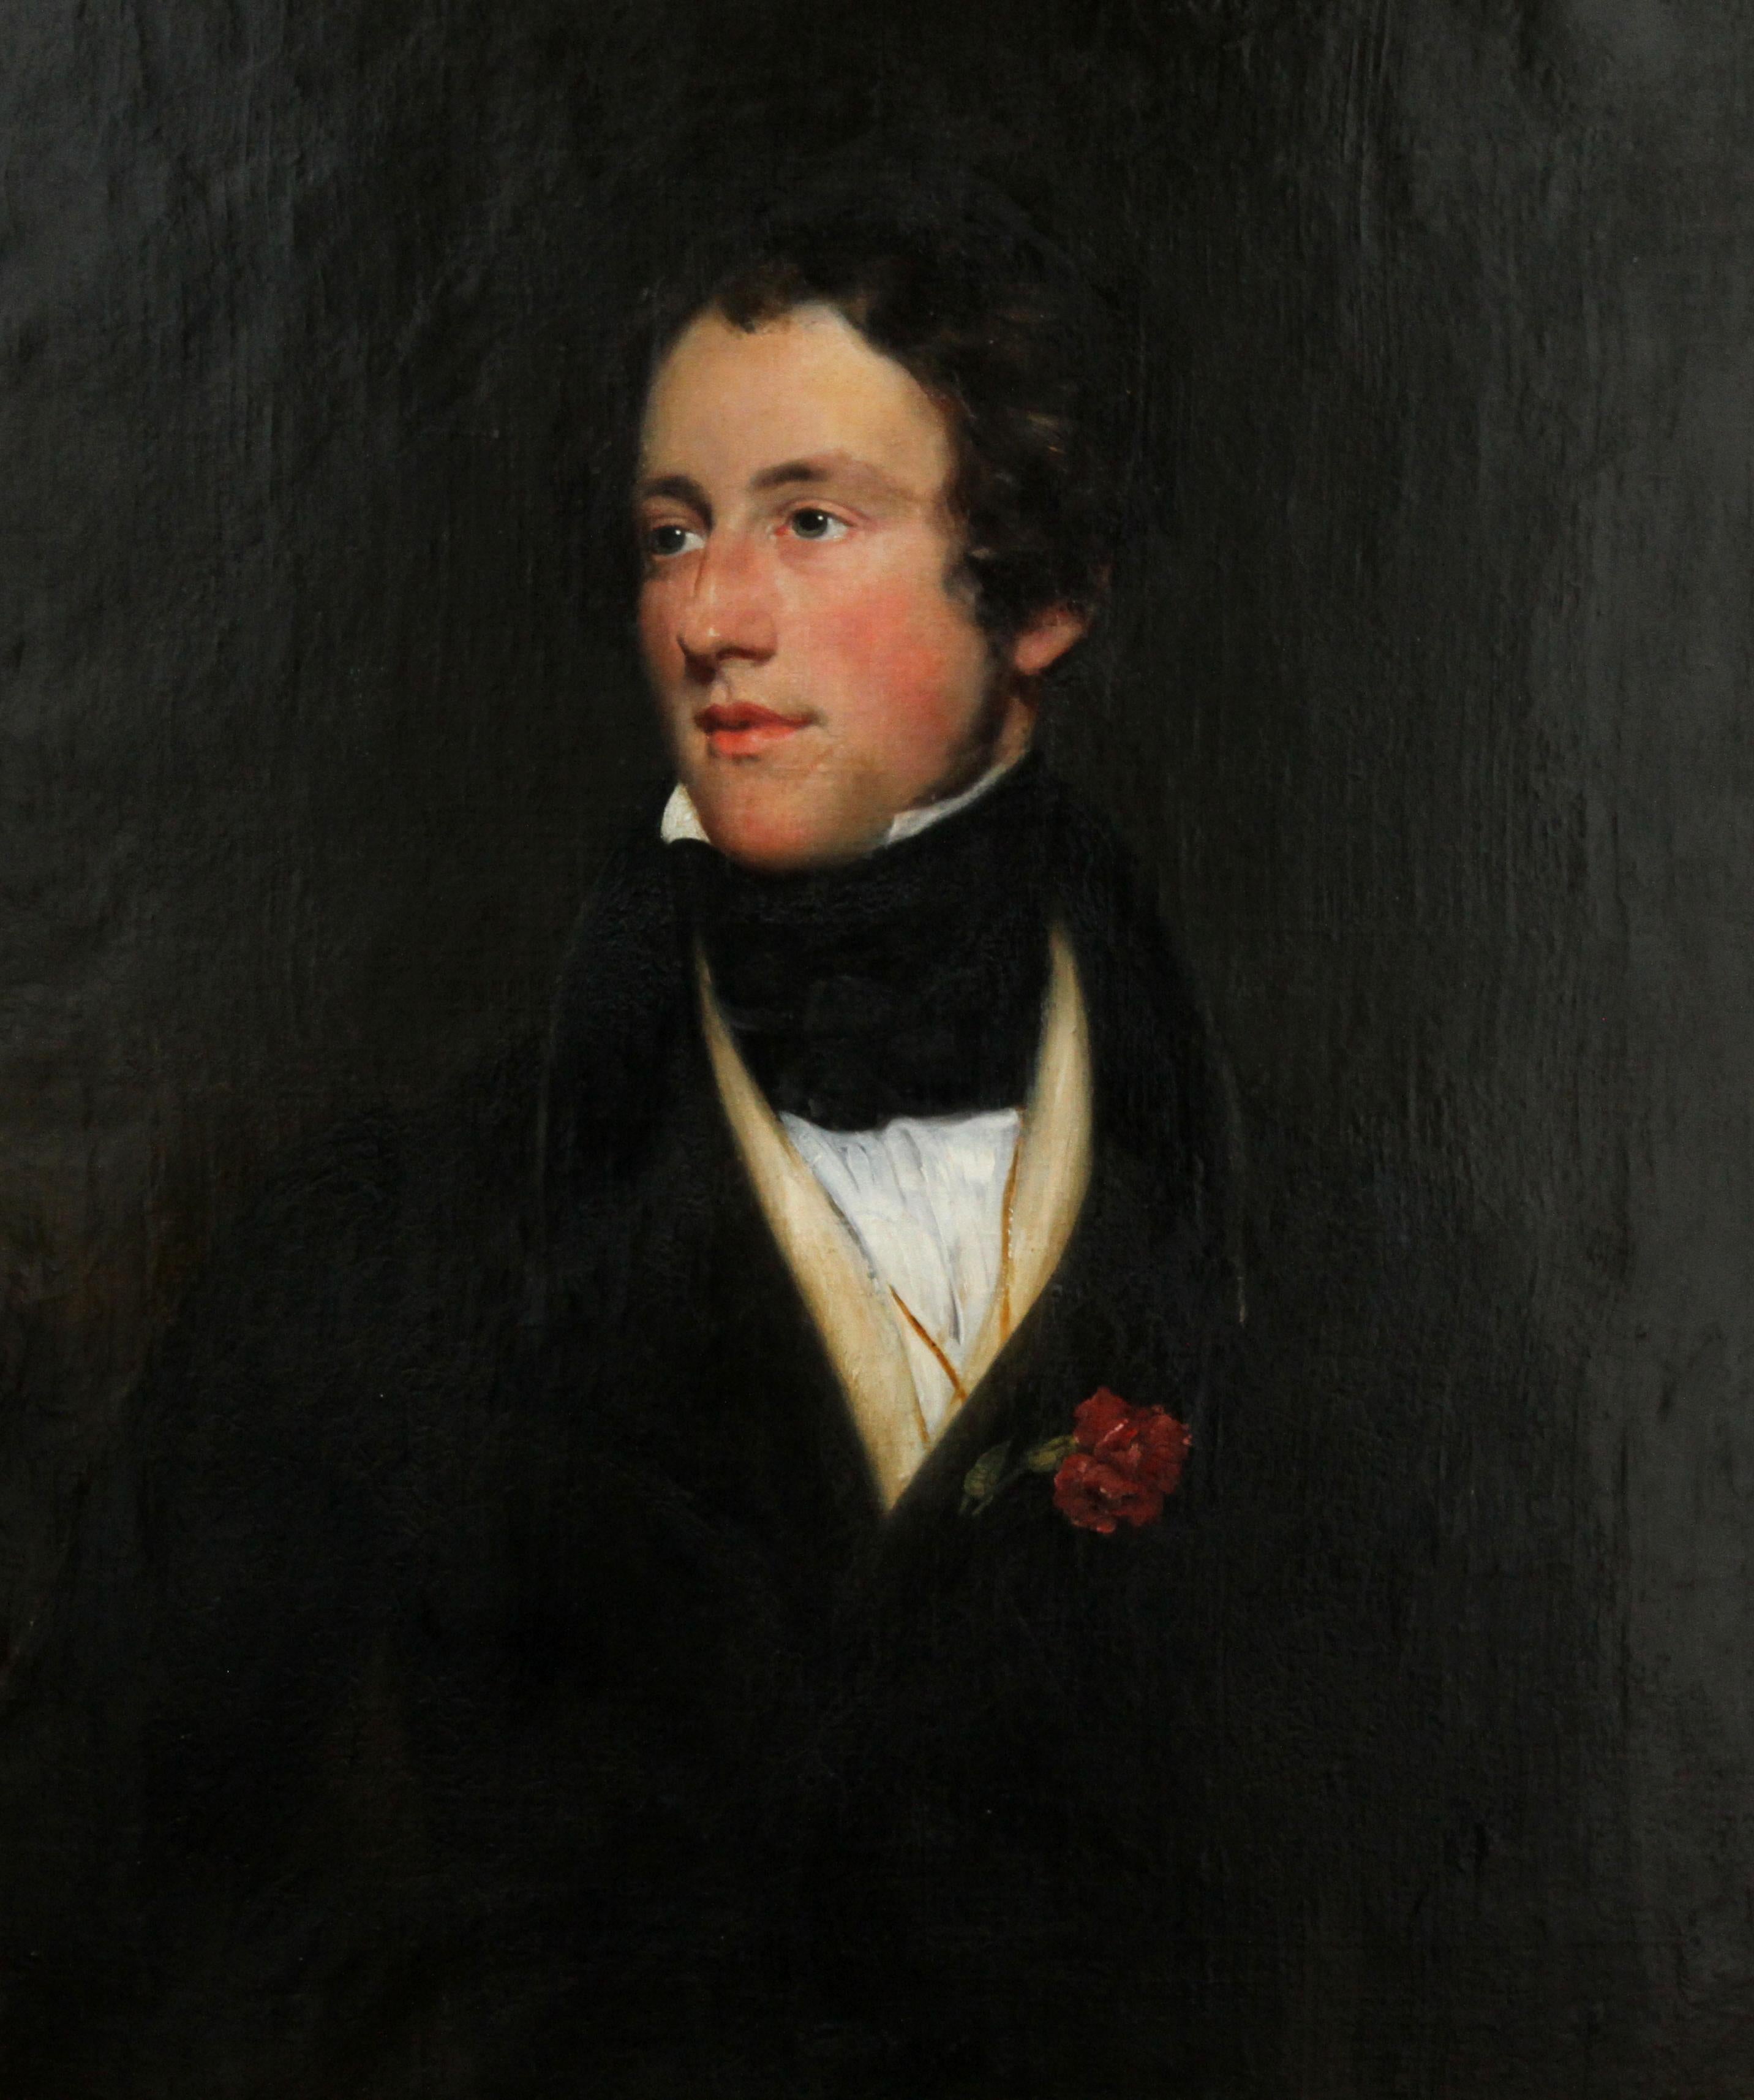 Portrait of a Gentleman - British Regency art 1820 male portrait oil painting  - Black Portrait Painting by Thomas Lawrence (circle)